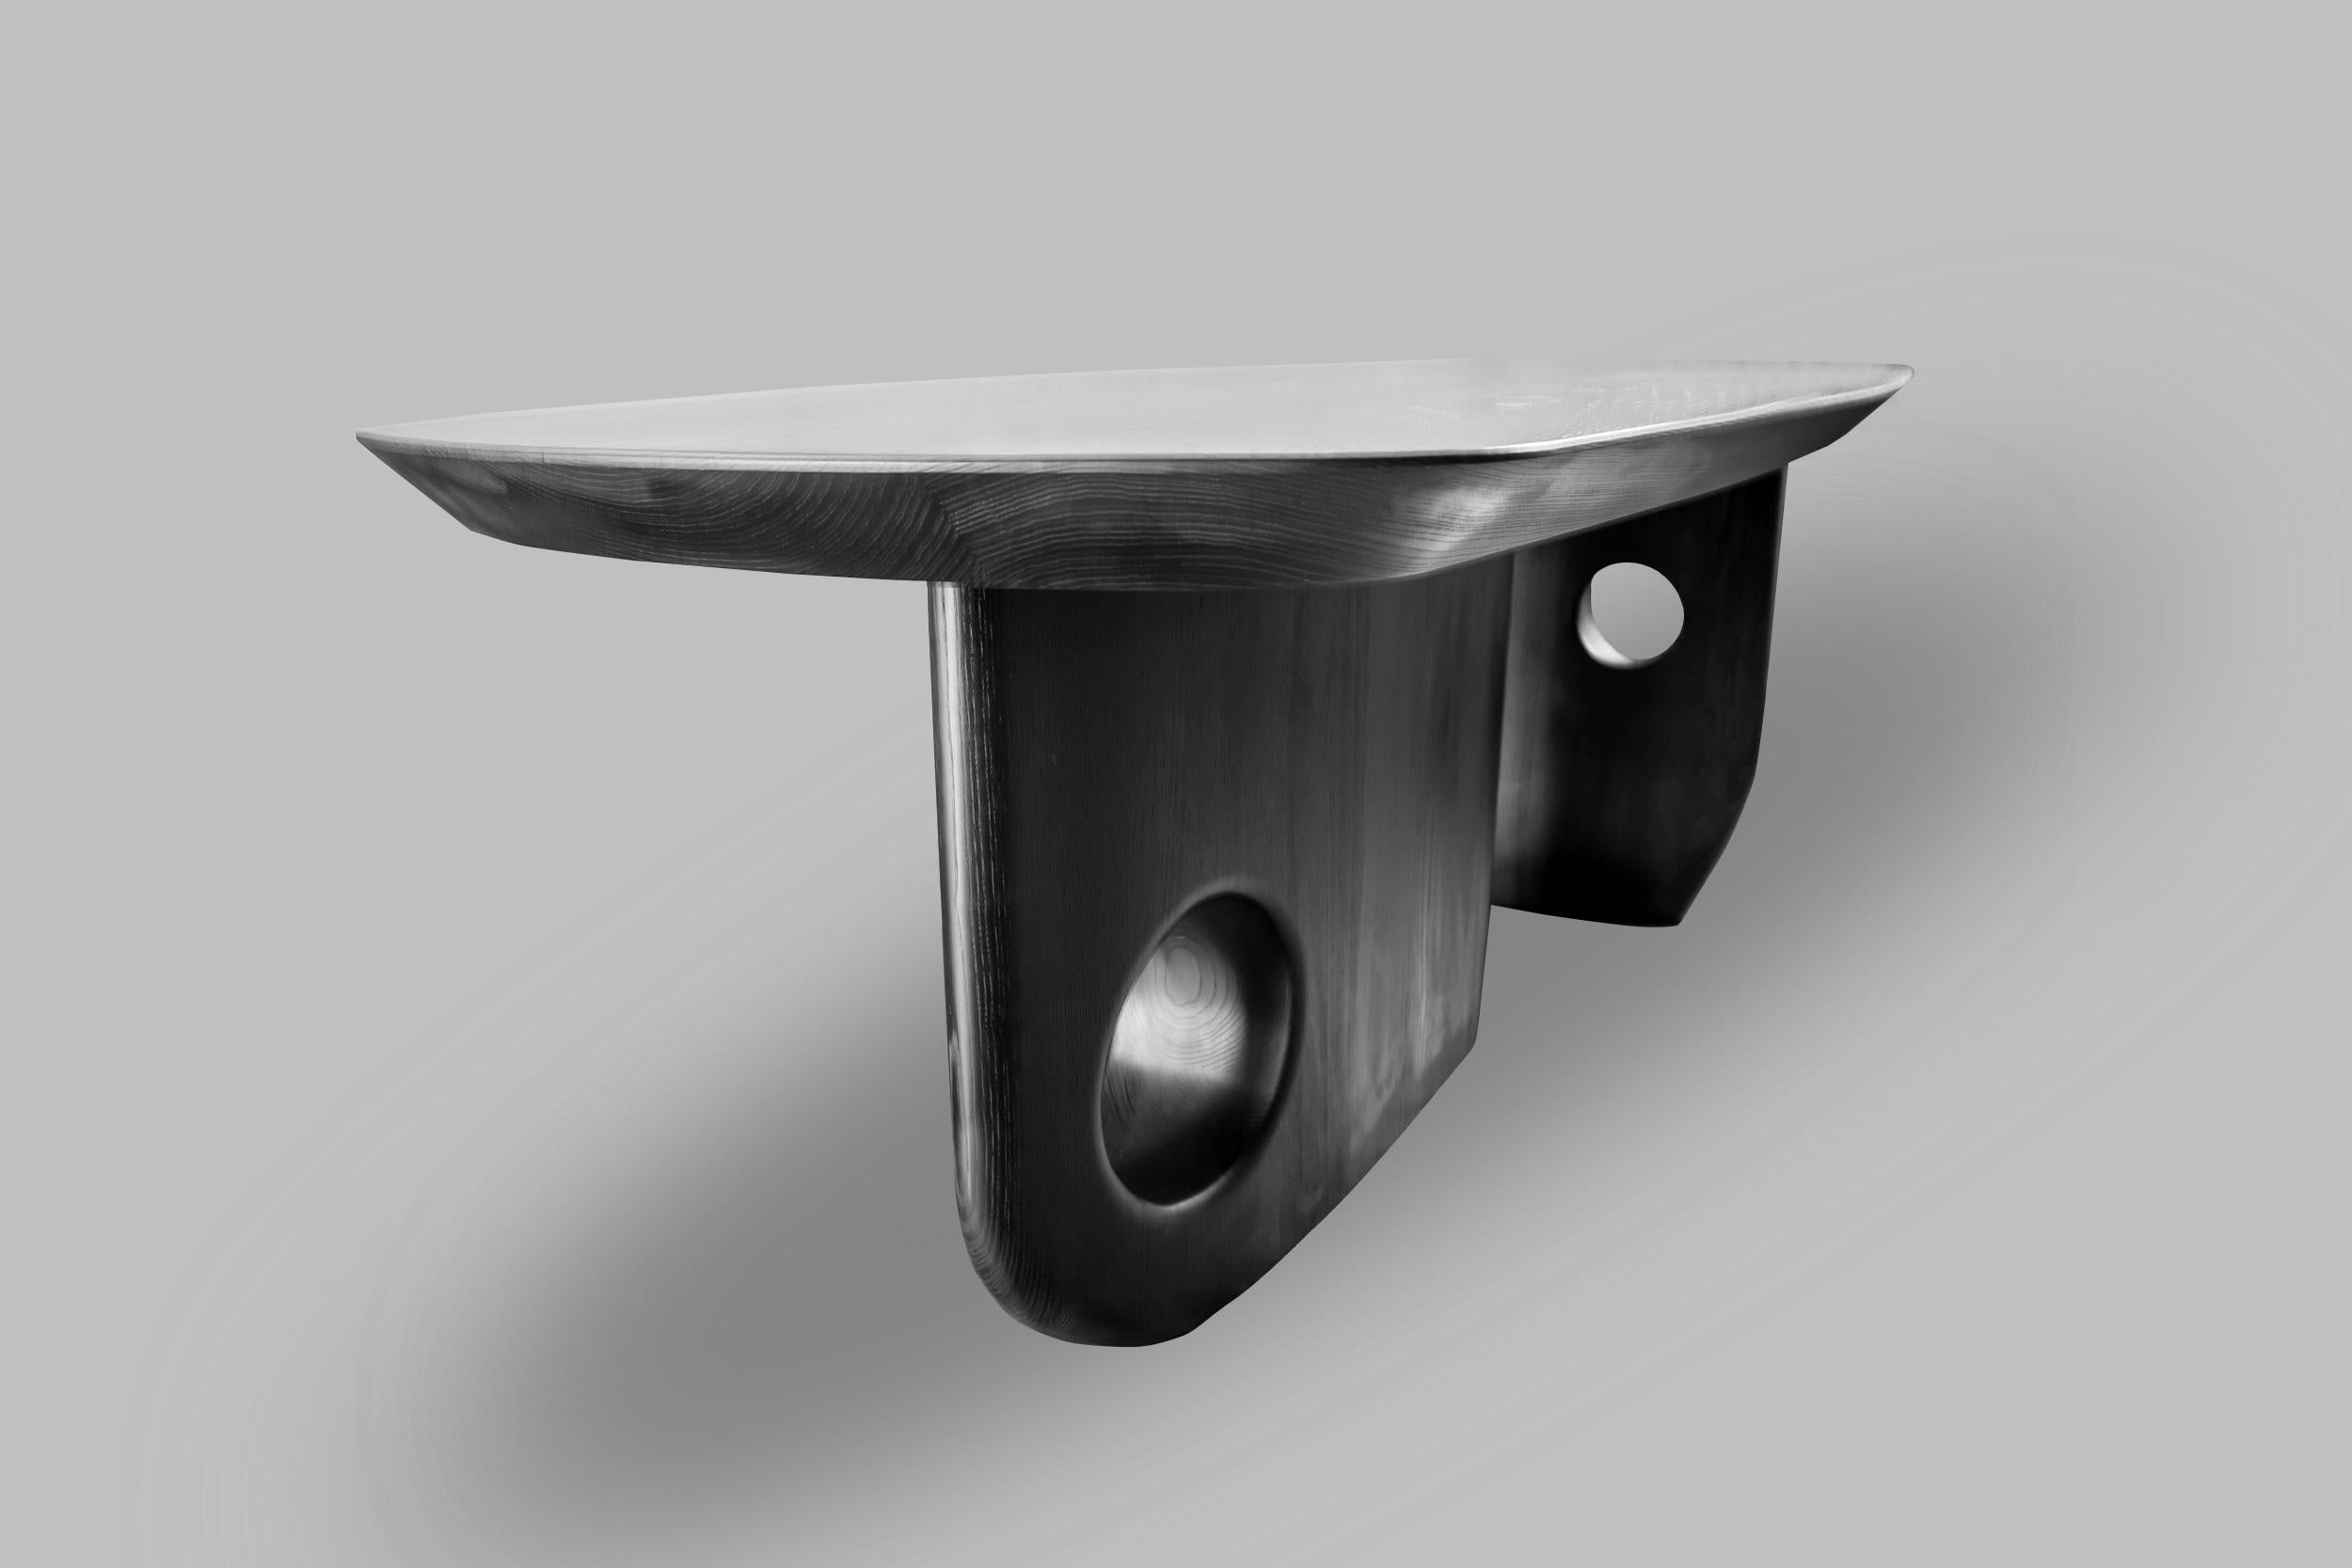 Steel Organic bespoke - Menhir Sculptural Table/Desk Designed by Toad Gallery London For Sale